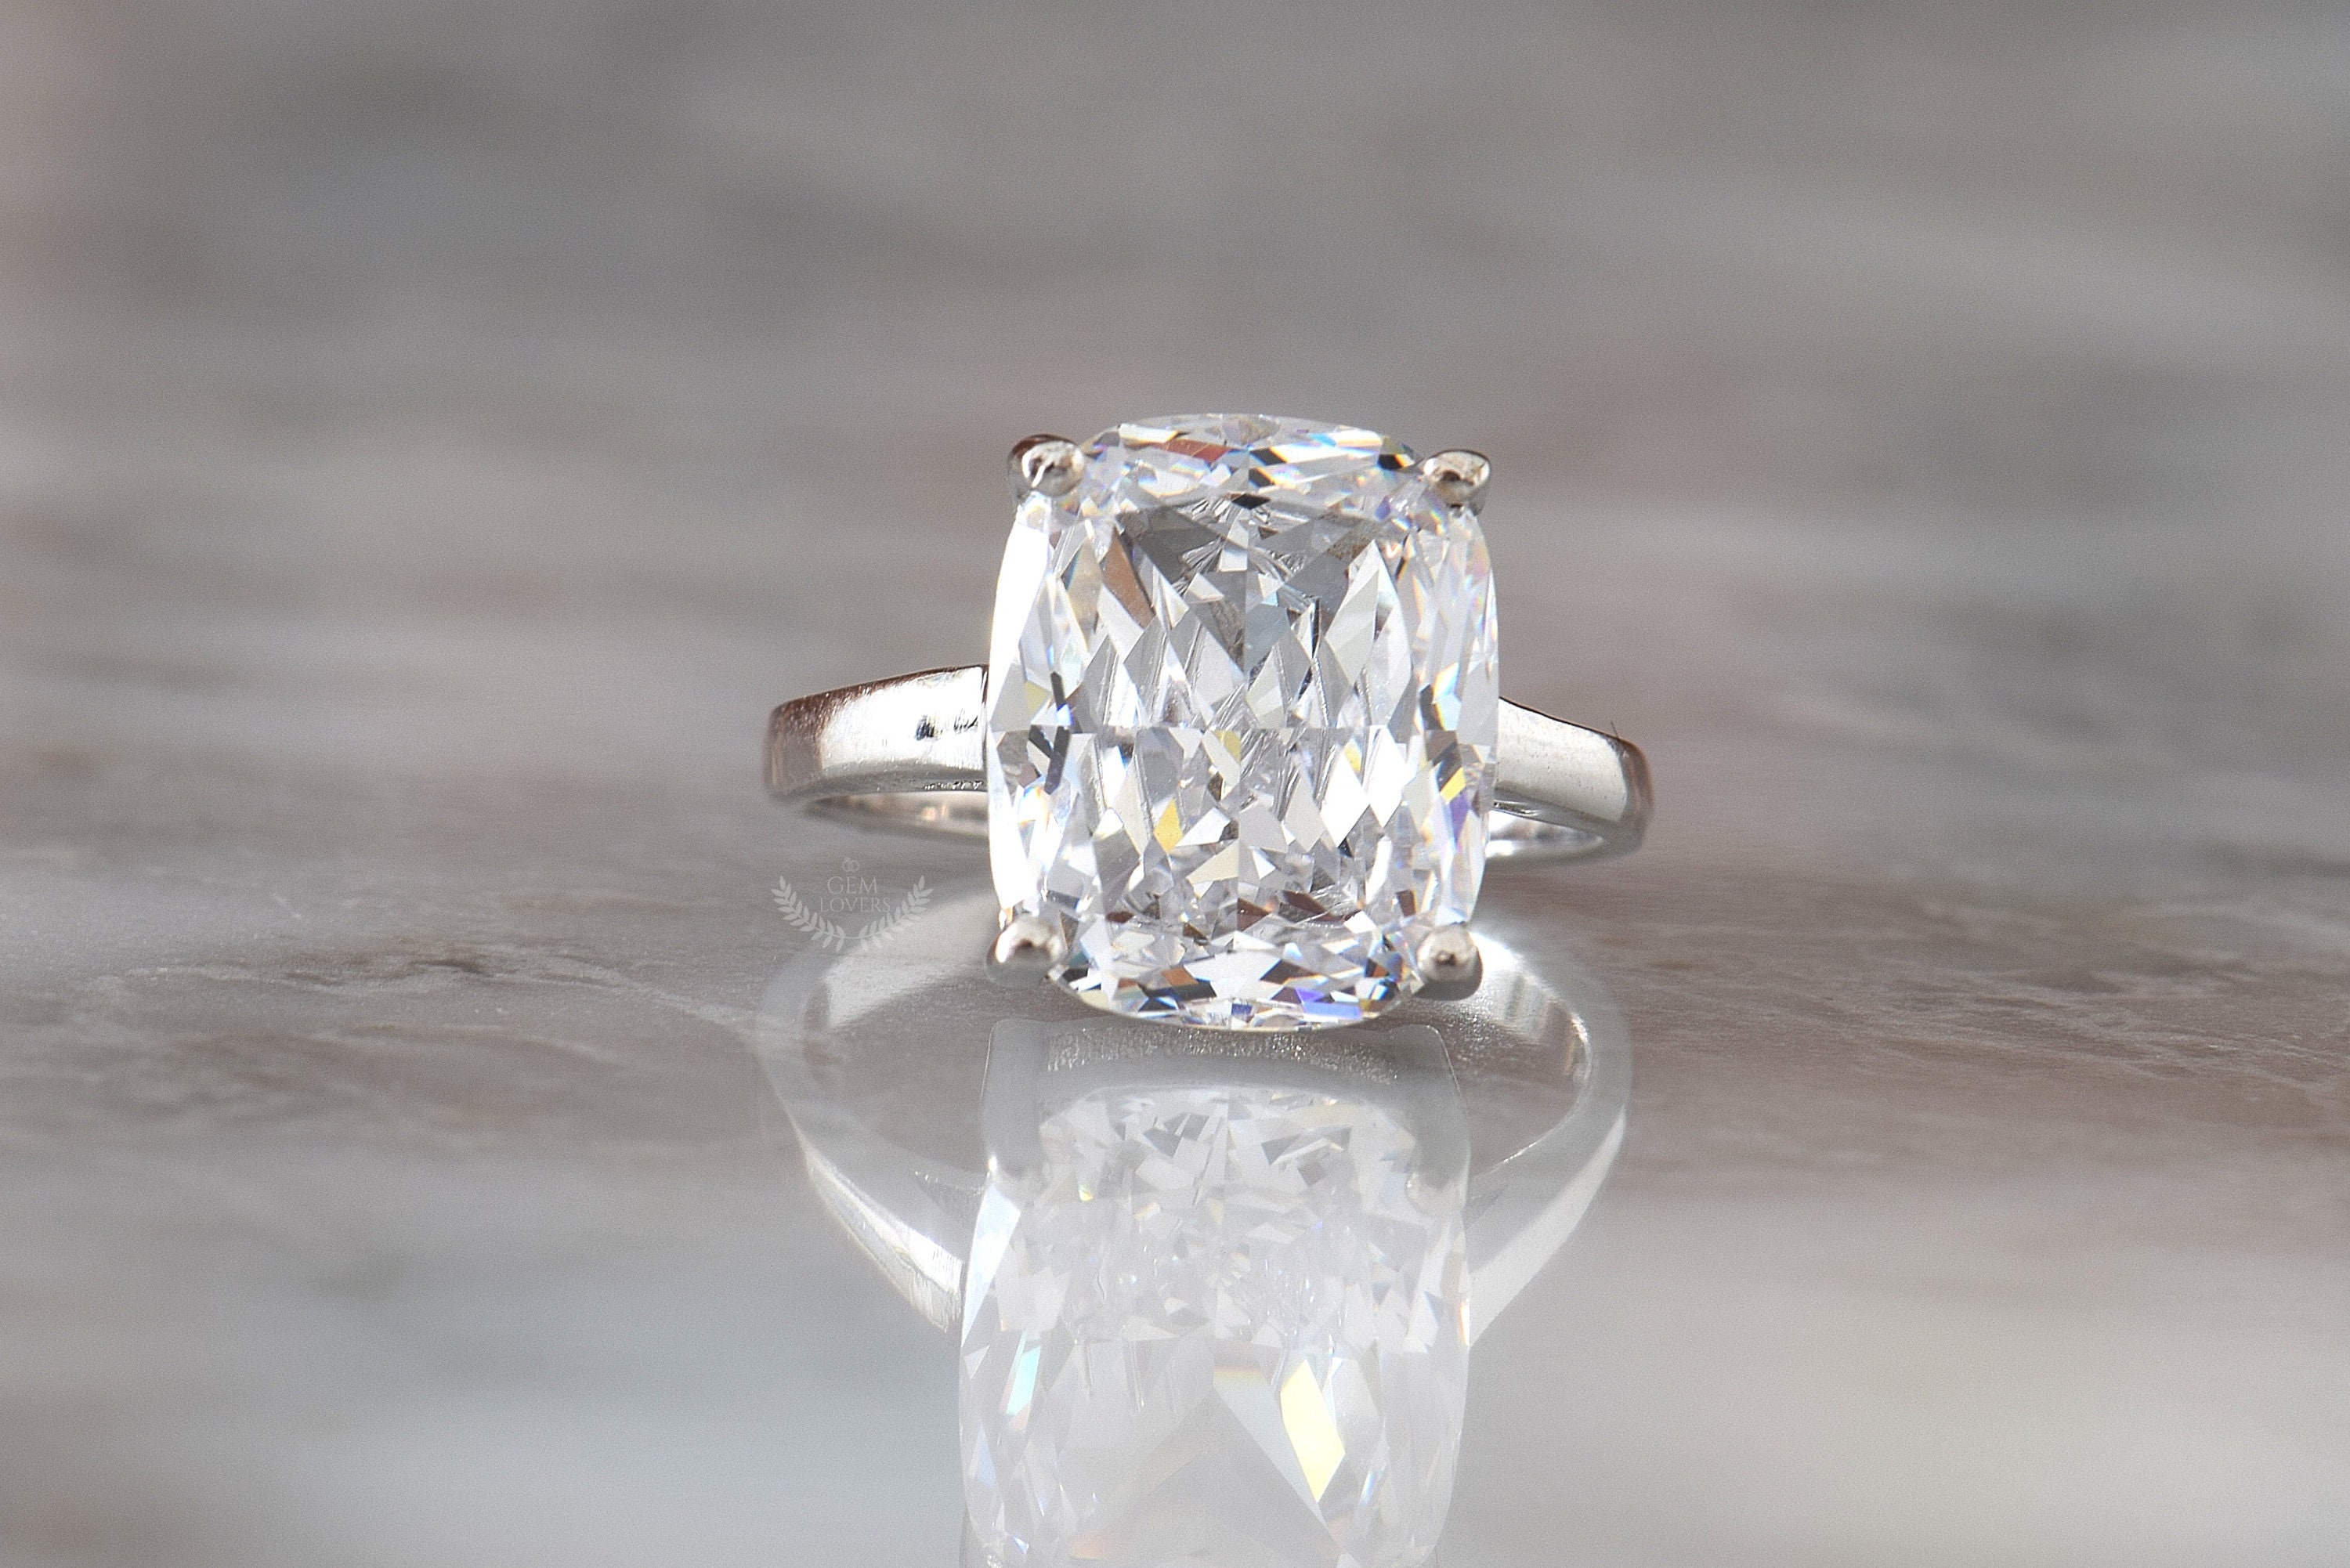 Cushion Cut Diamond Engagement Rings for Women 6 Carats | Etsy